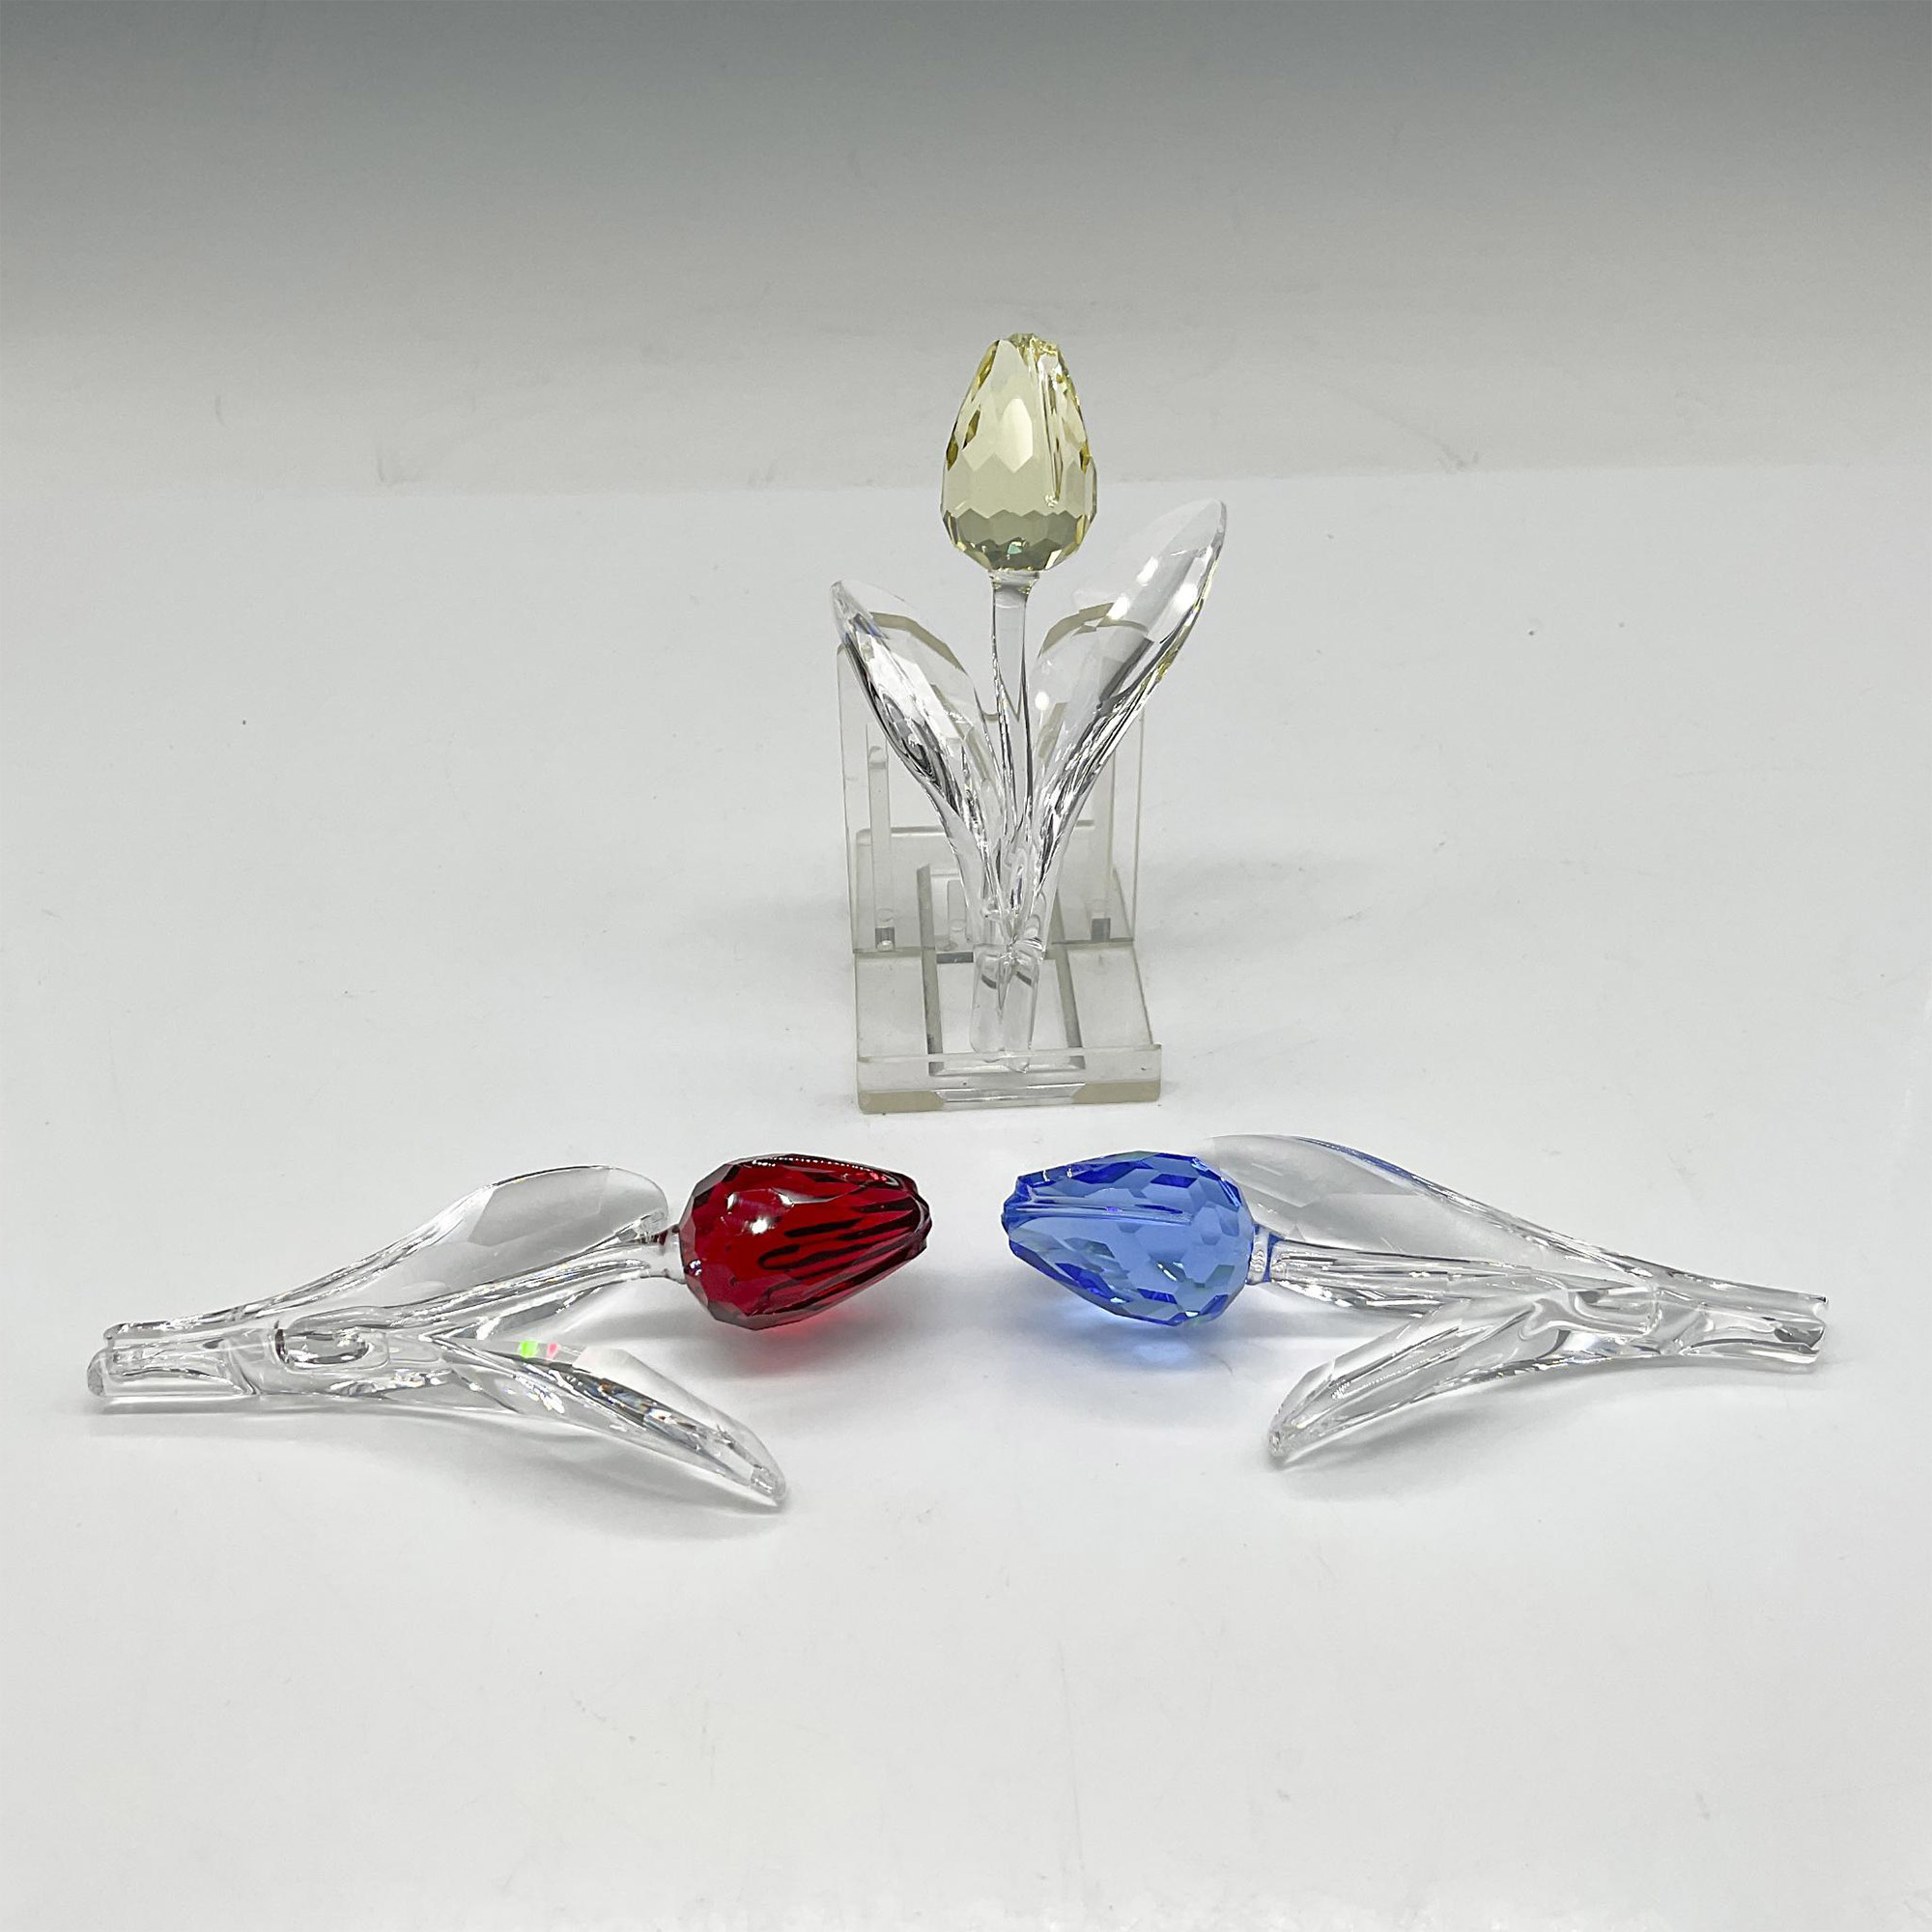 Swarovski Crystal Society Figurines, 3 Tulips - Image 2 of 3